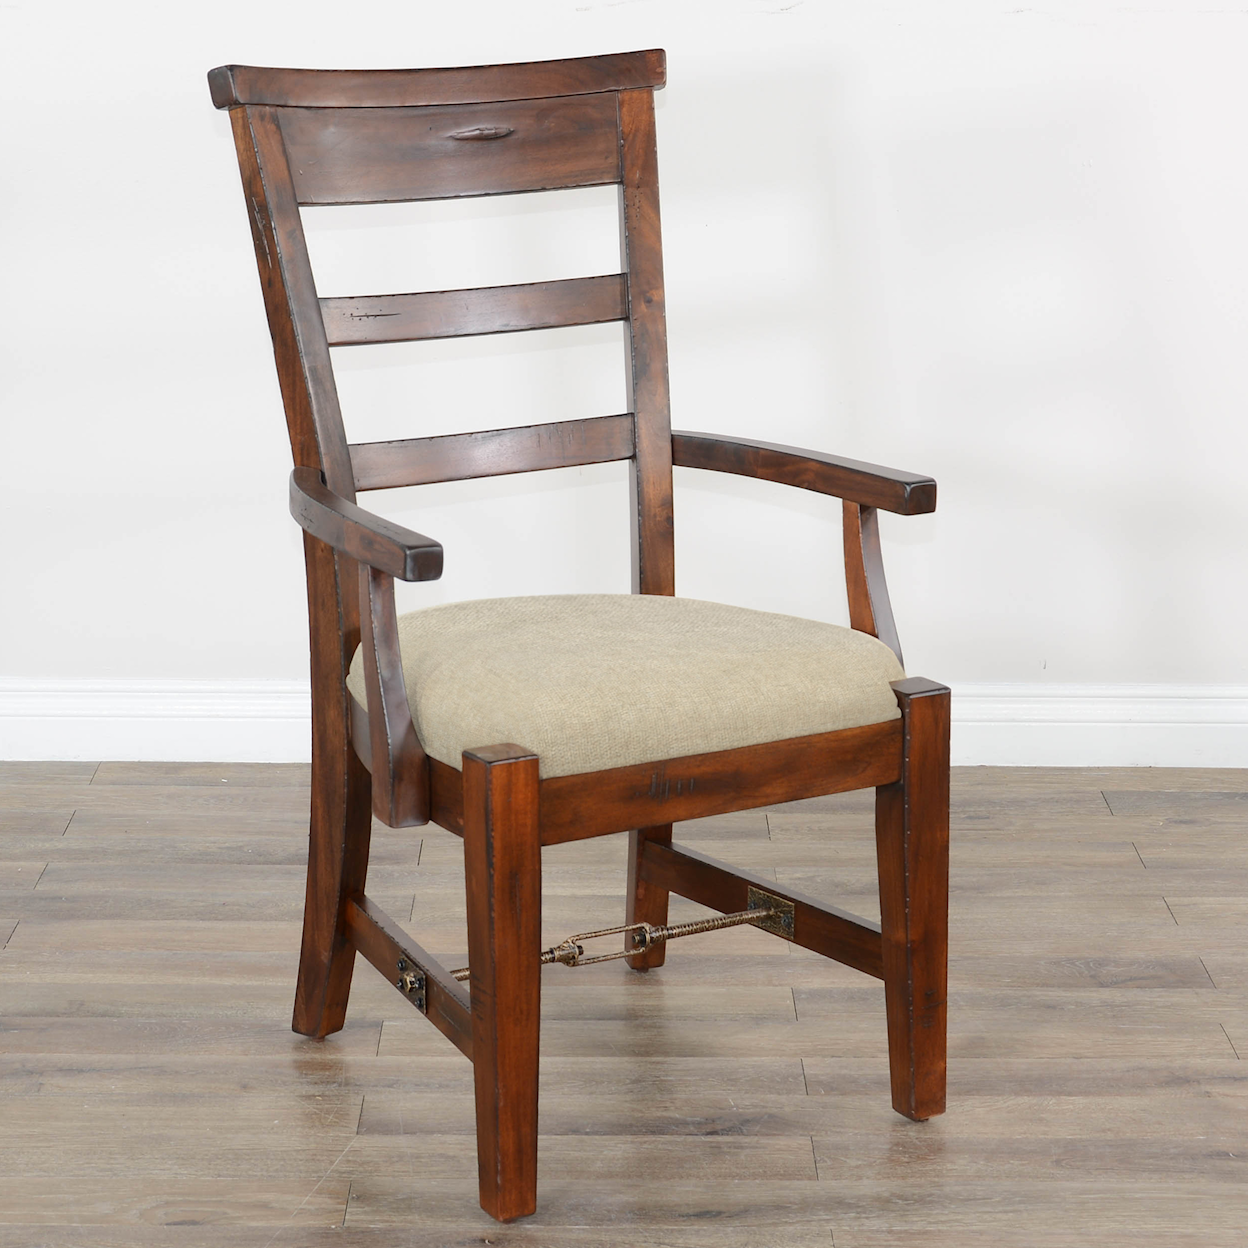 Sunny Designs Tuscany Arm Chair, Cushion Seat